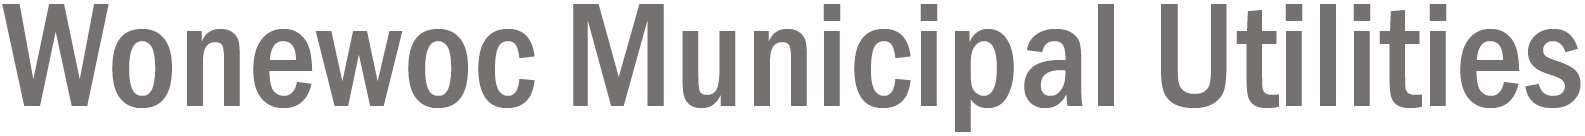 Wonewoc logo